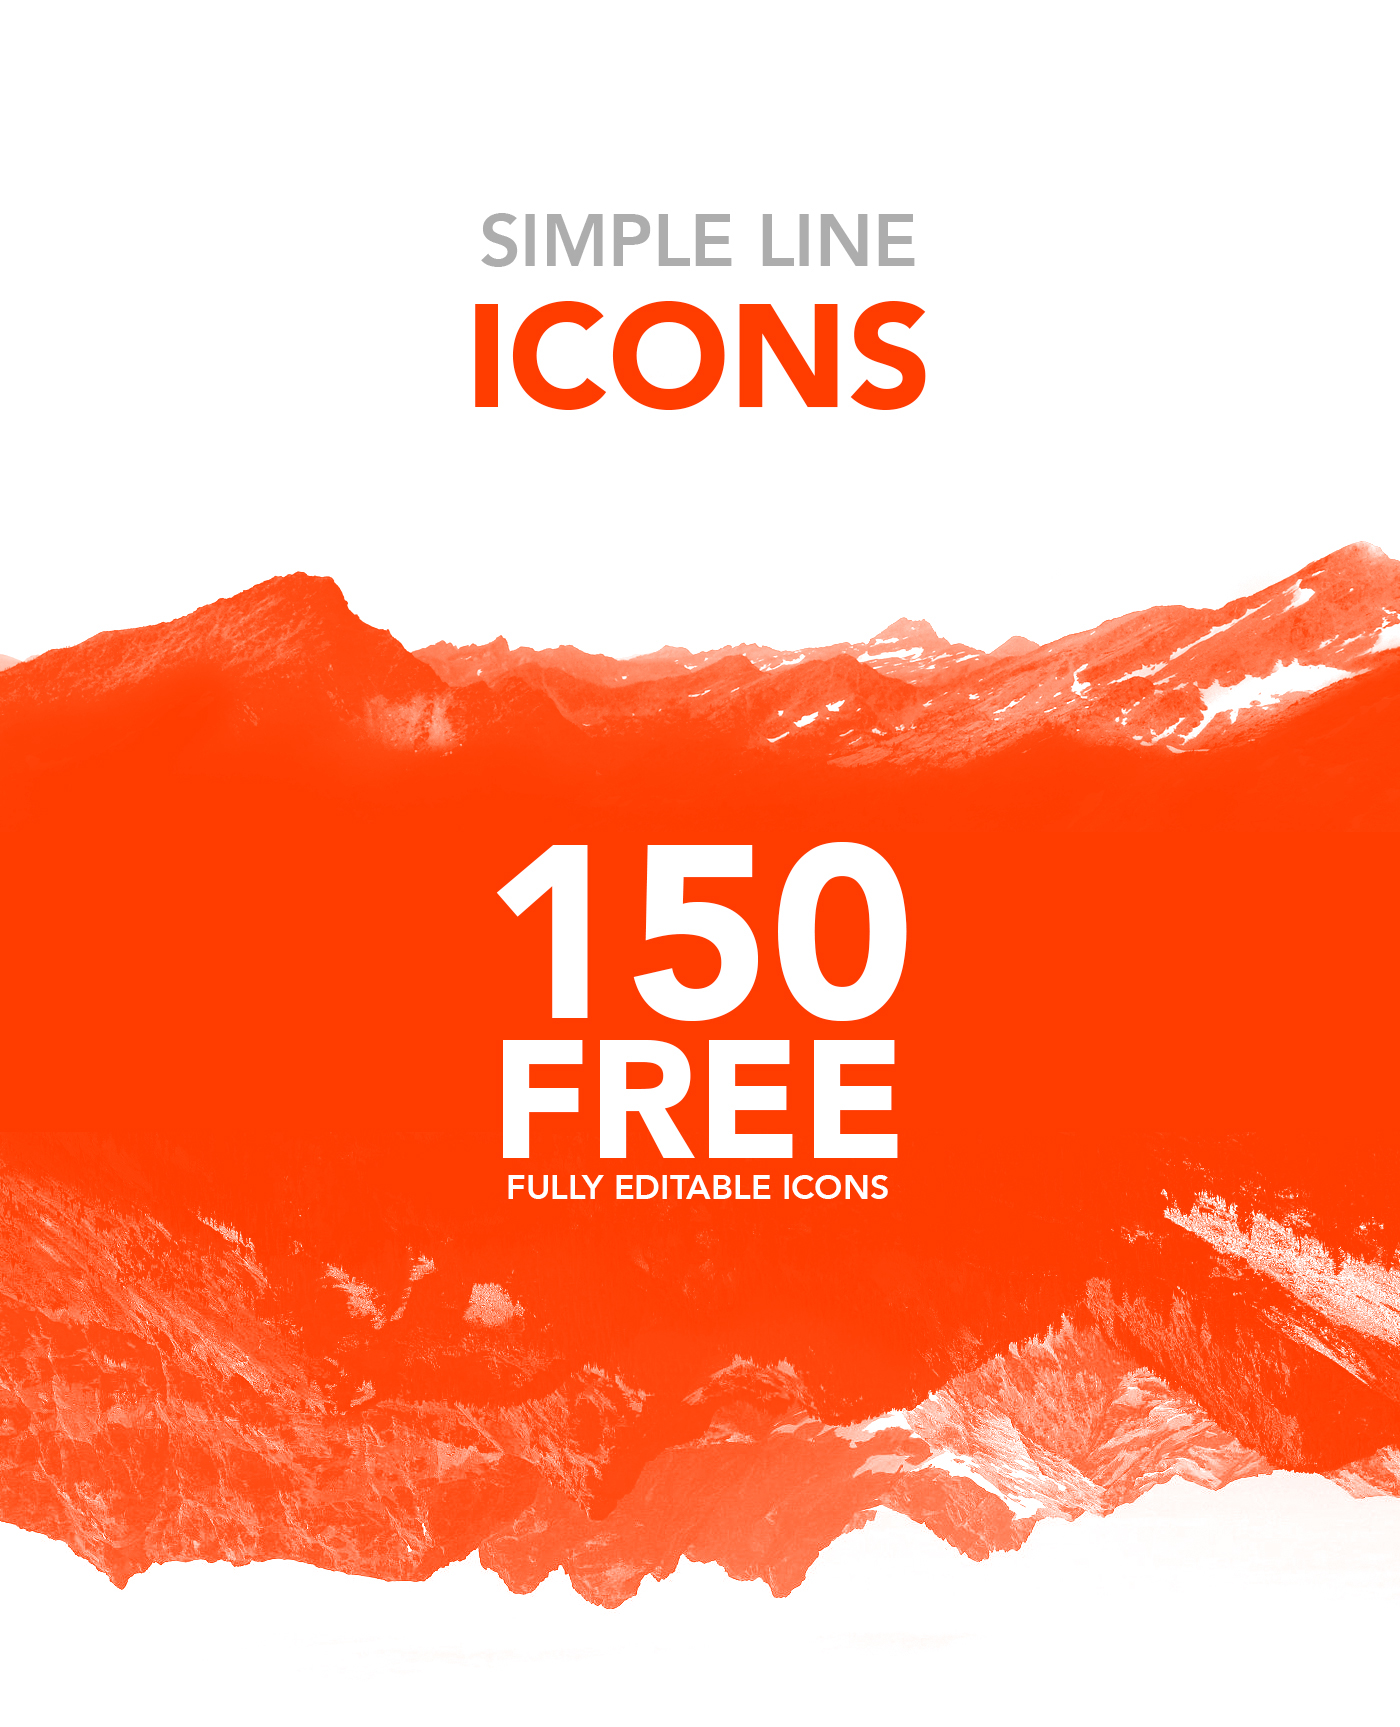 Icon icons illustrations logos logo app design Web design app Responsive vector sketch free free icon free icons